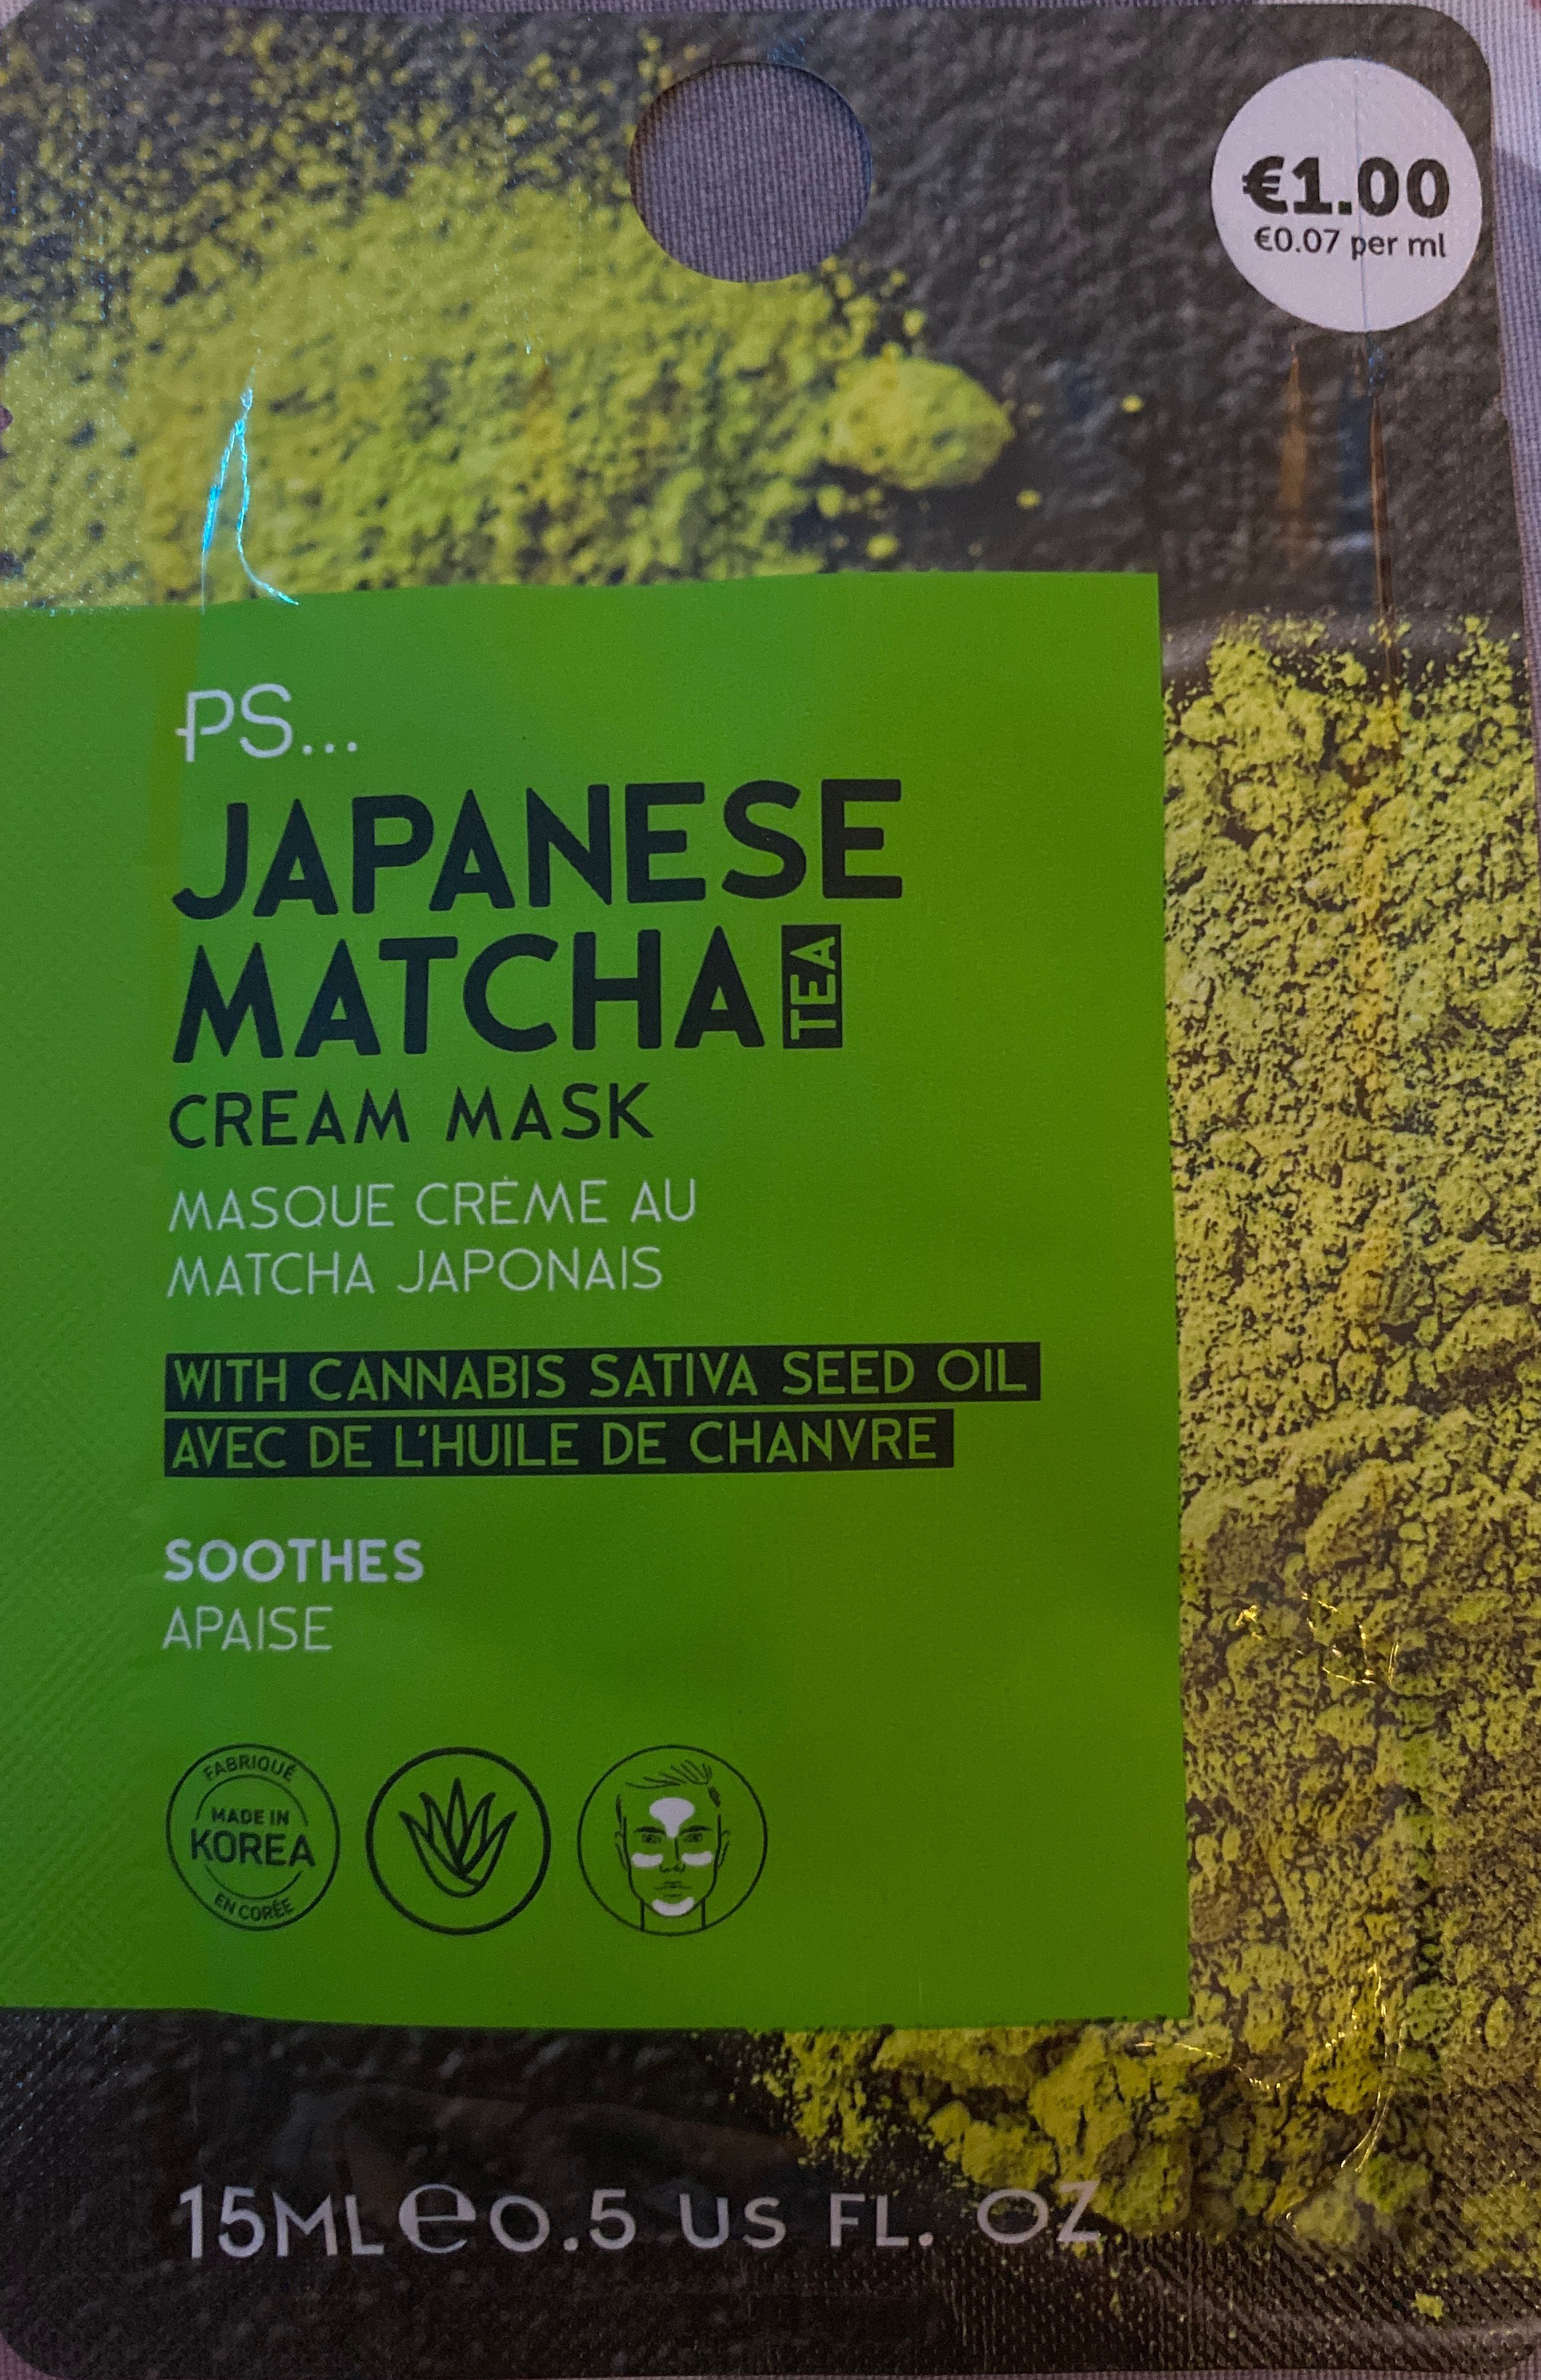 PS Japanese Match Tea Cream Mask